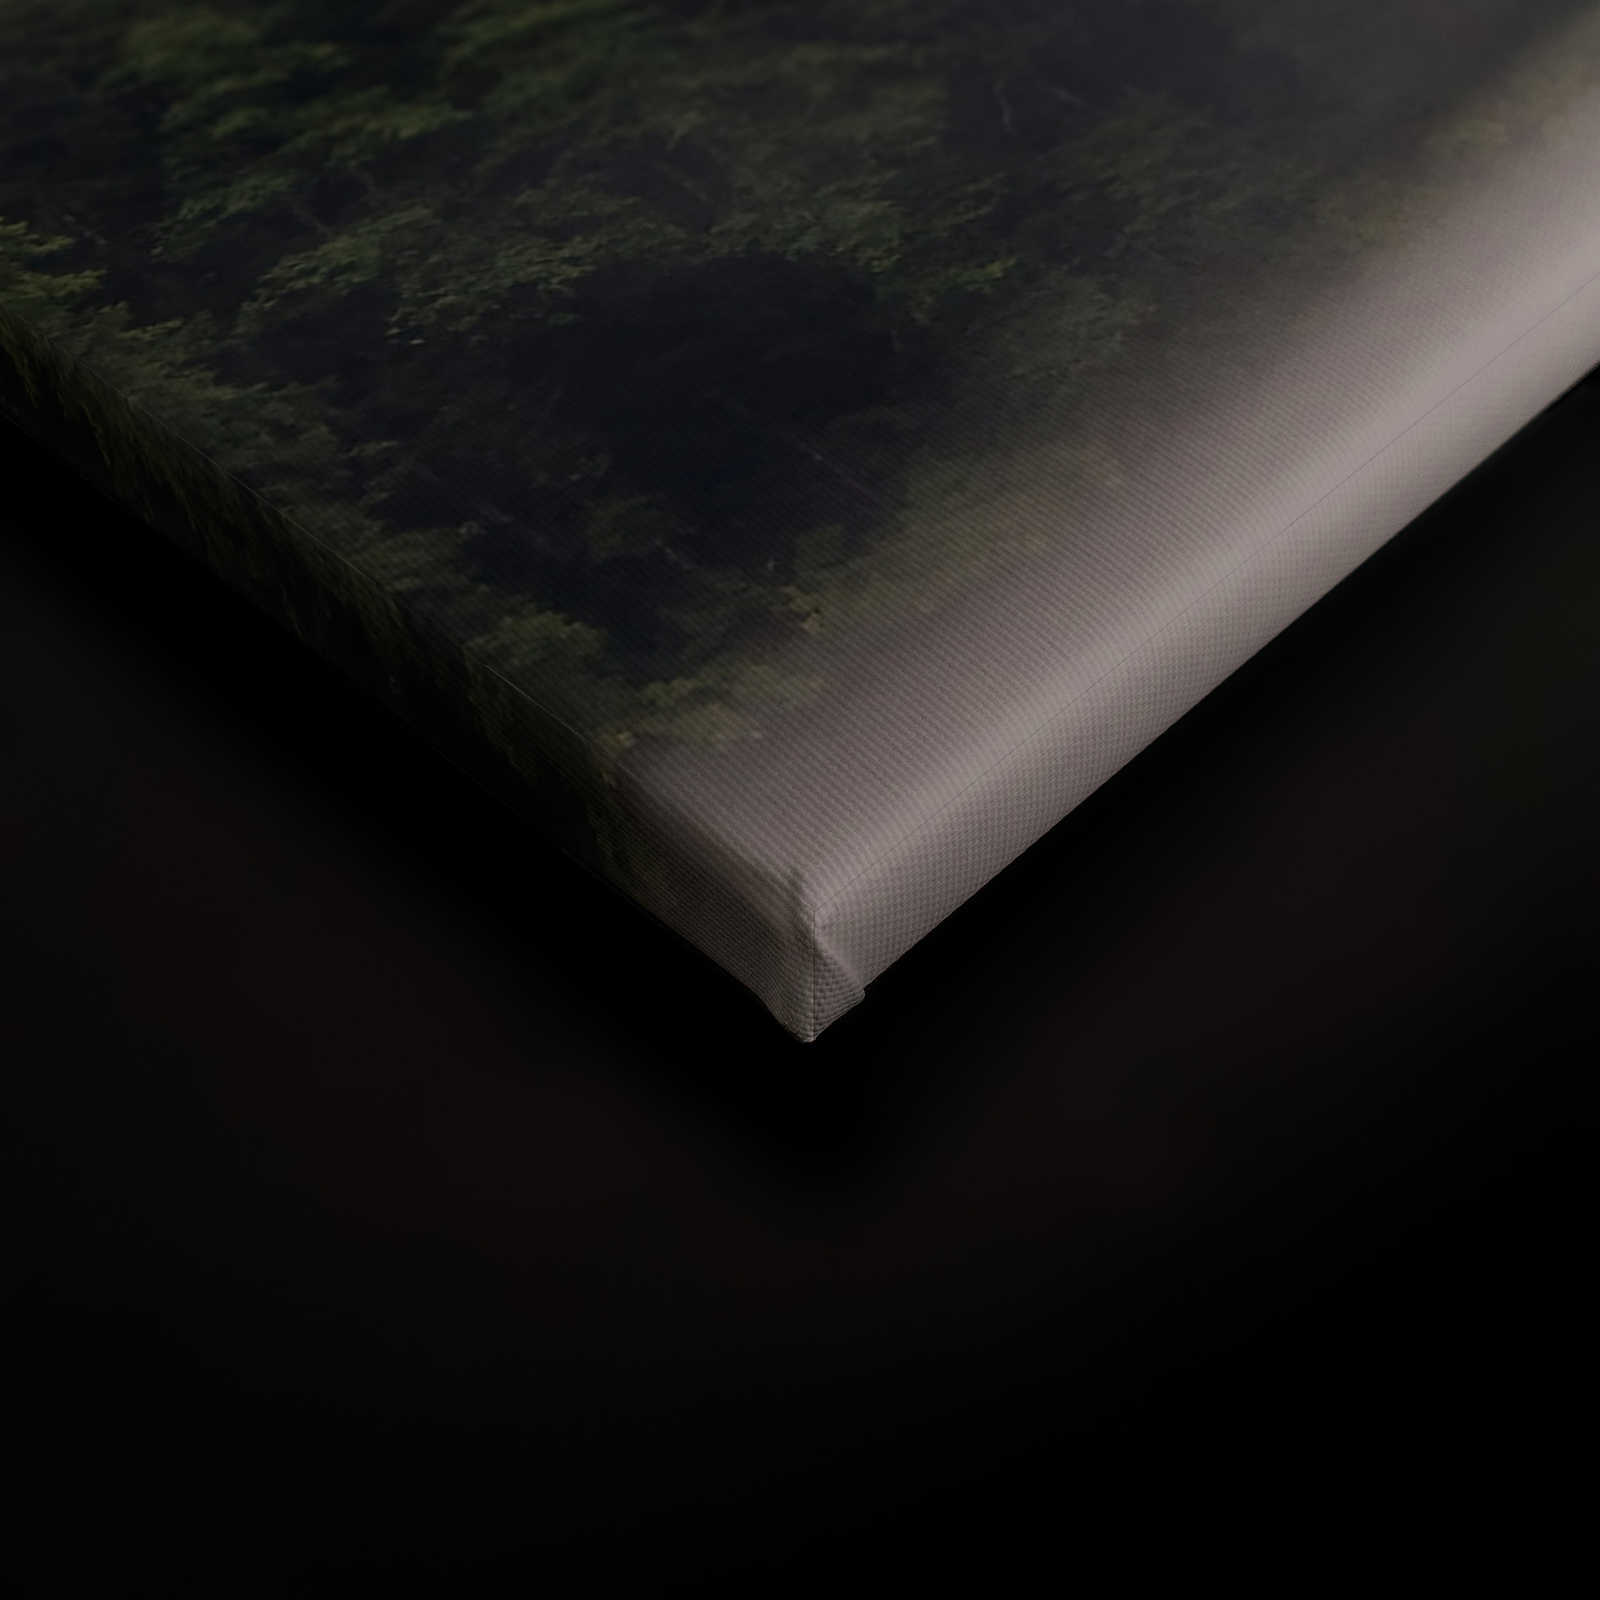             Leinwandbild vernebelter Wald am See – 0,90 m x 0,60 m
        